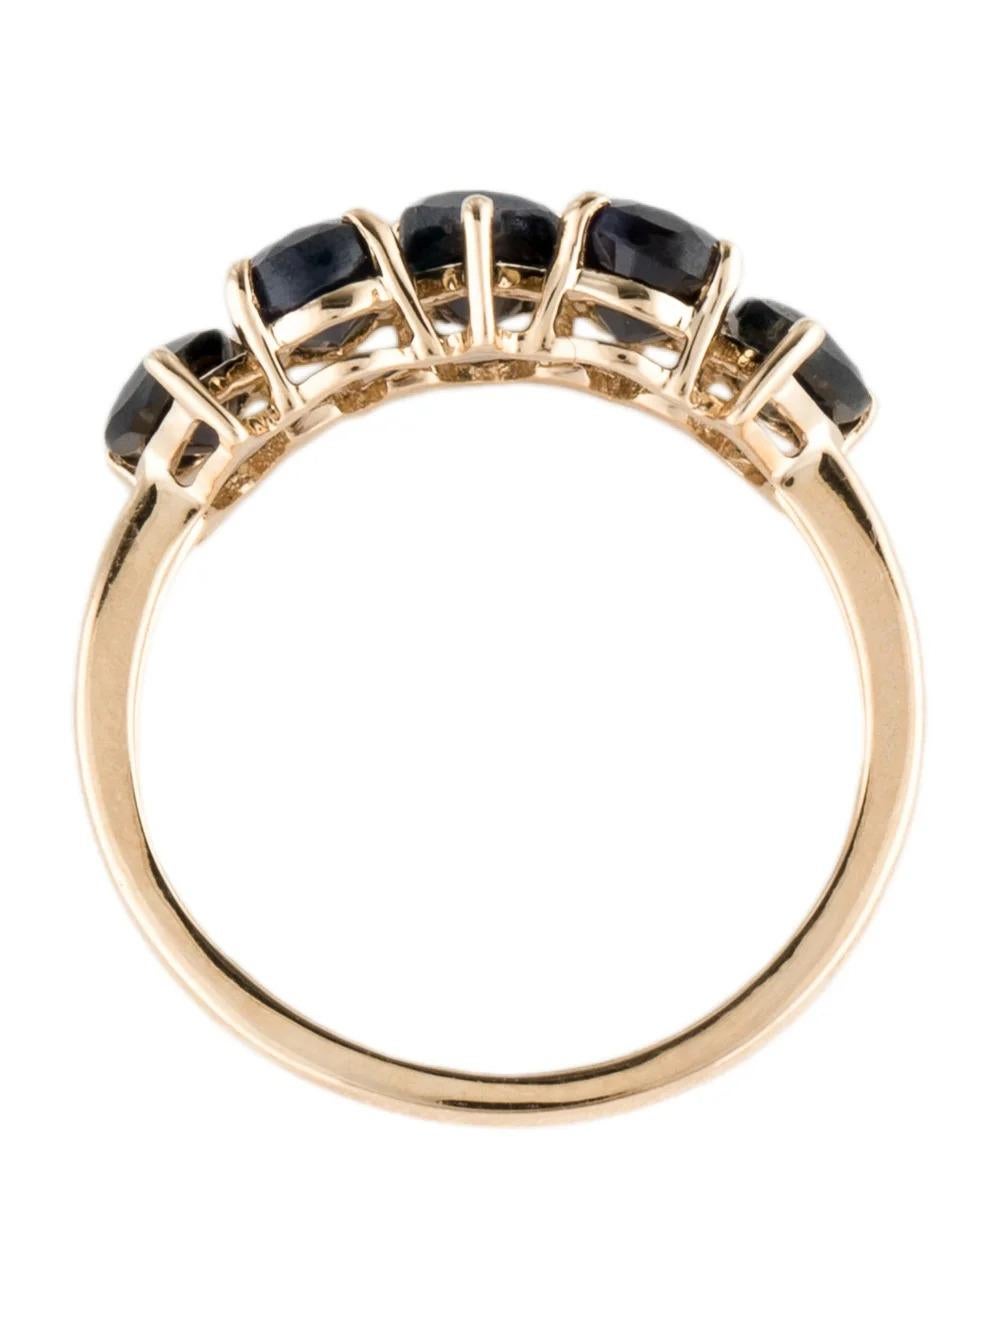 Women's 14K Yellow Gold Sapphire Band Ring, Size 7: Elegant Gemstone Statement Piece For Sale